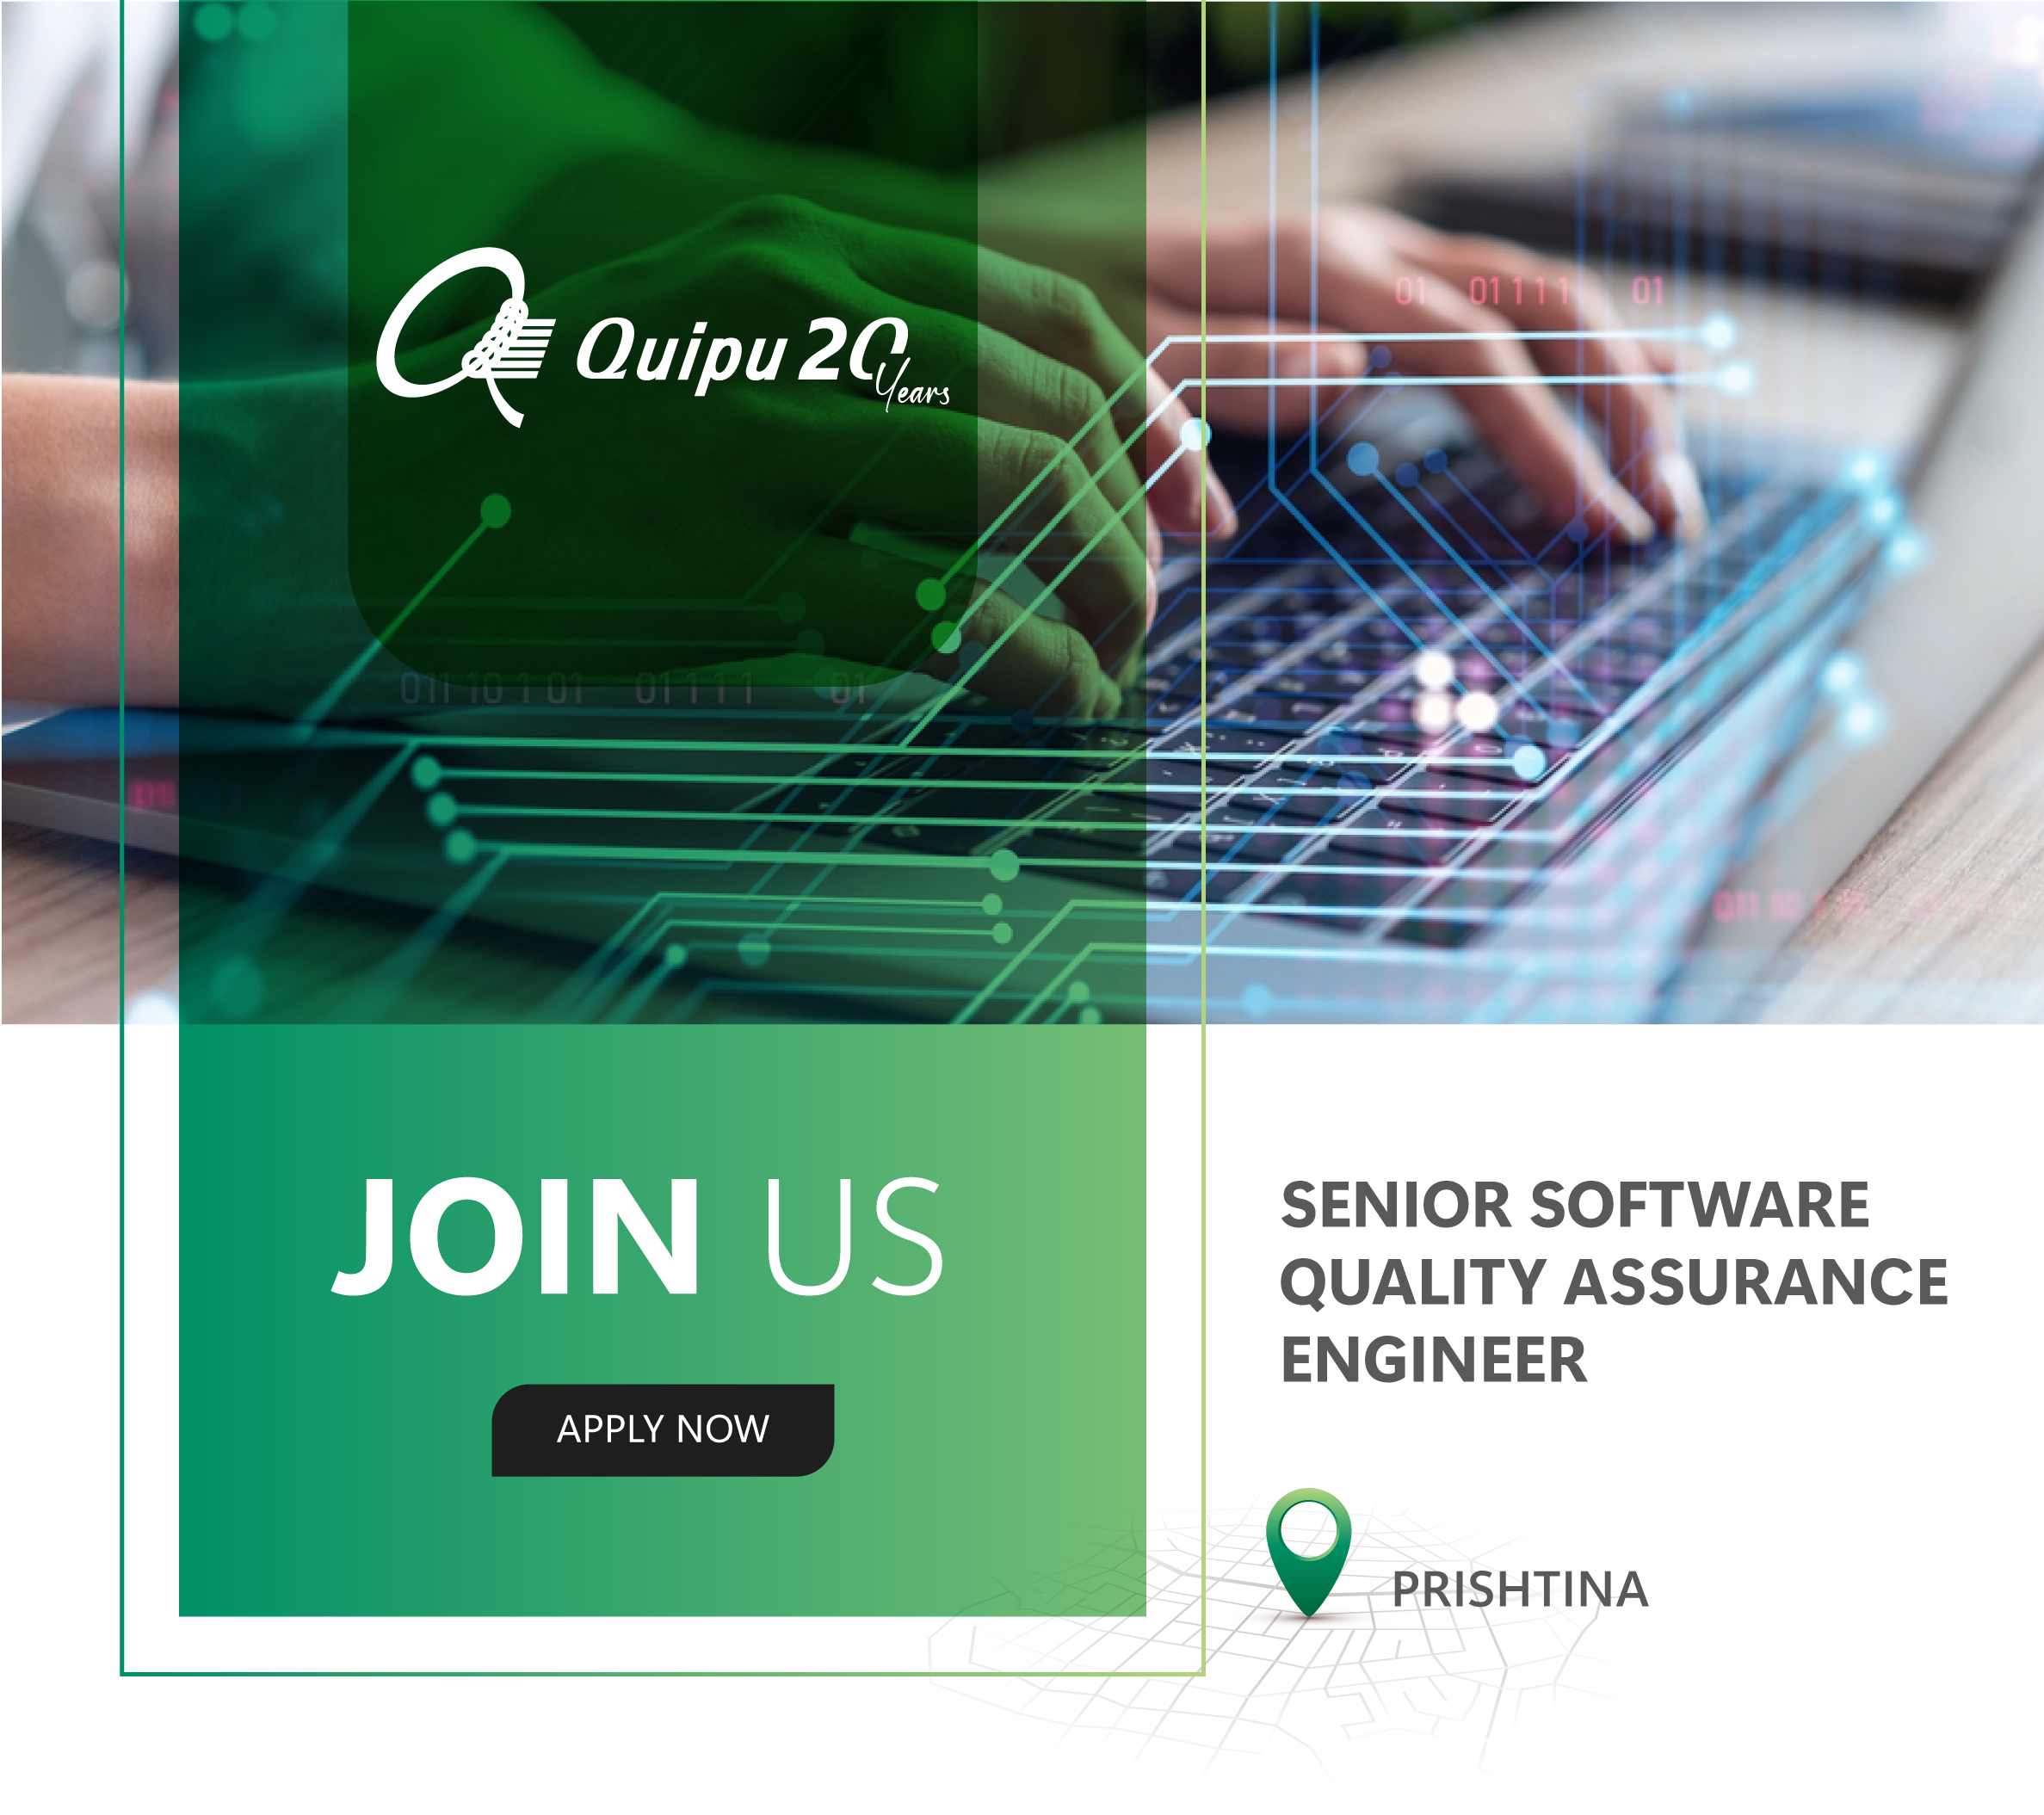 Senior Software Quality Assurance Engineer – Prishtina